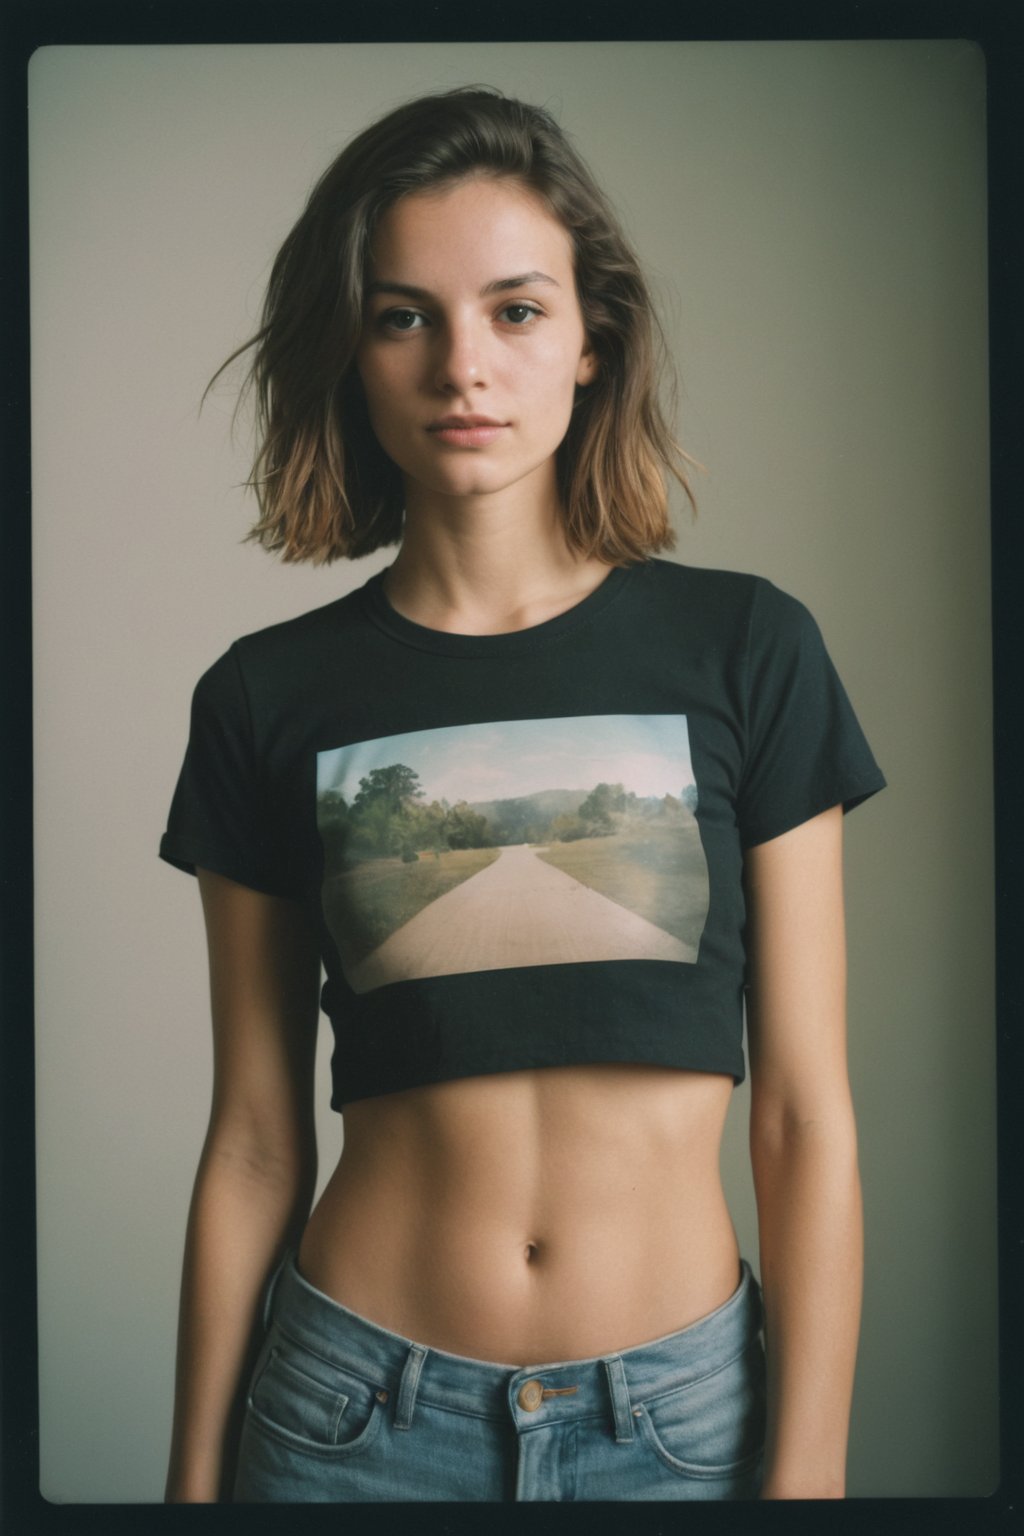 Portrait of a beautiful slim alternative 20 year old ,  midriff t-shirt,  shot on polaroid, analog, film photograpy, film grain,